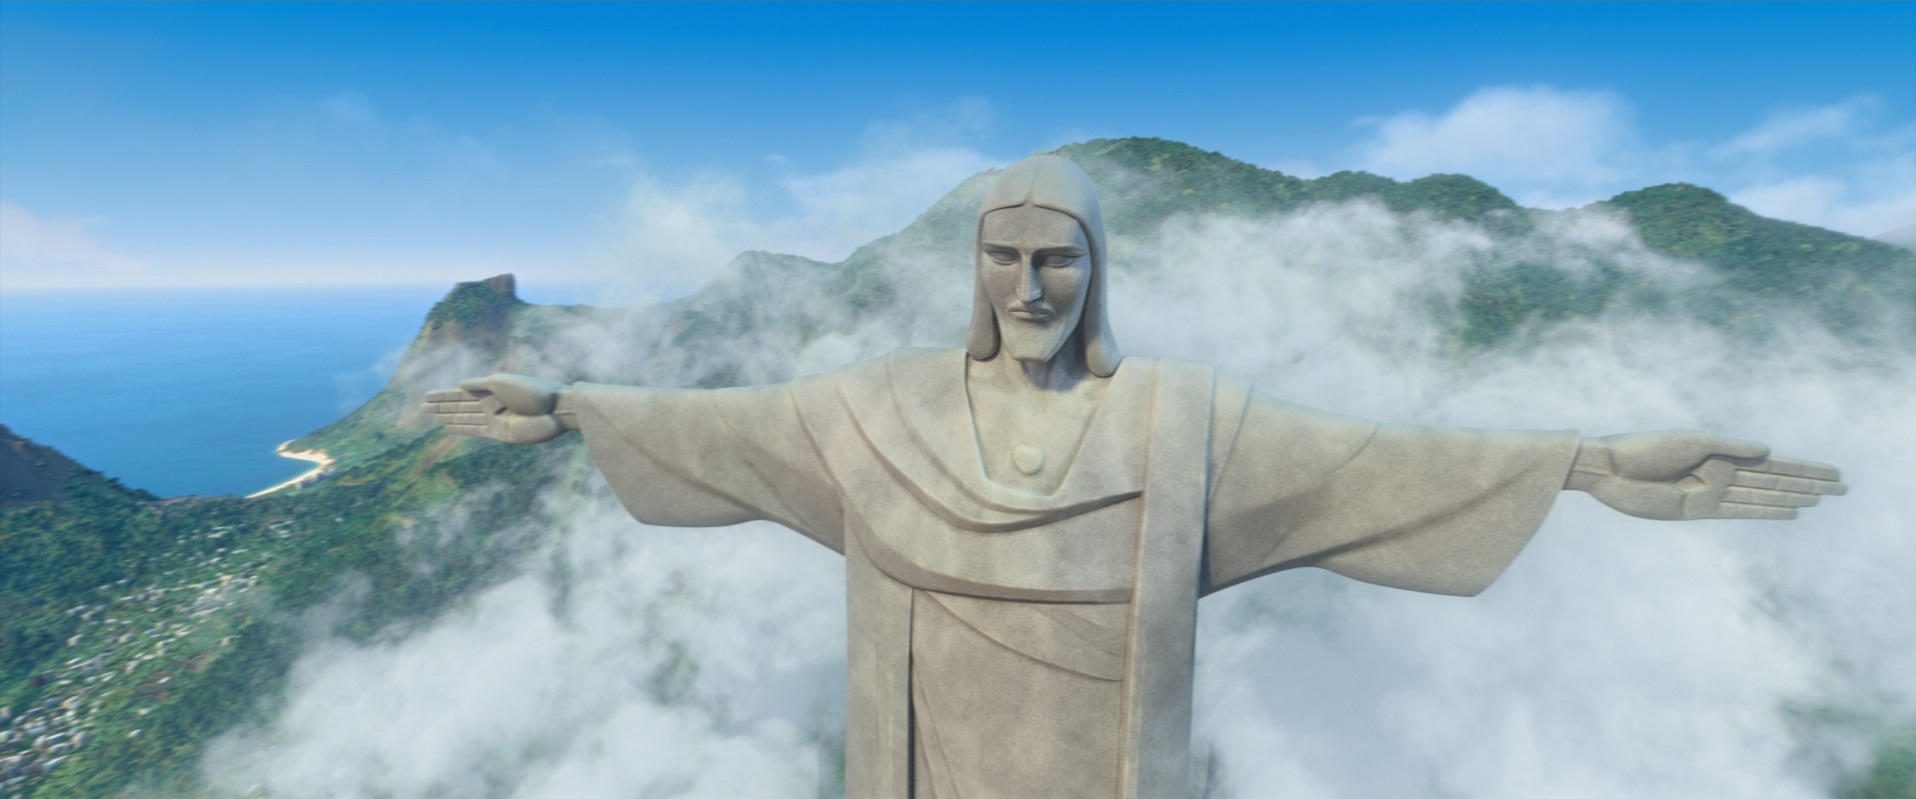 Christ the Redeemer | Rio Wiki | Fandom powered by Wikia